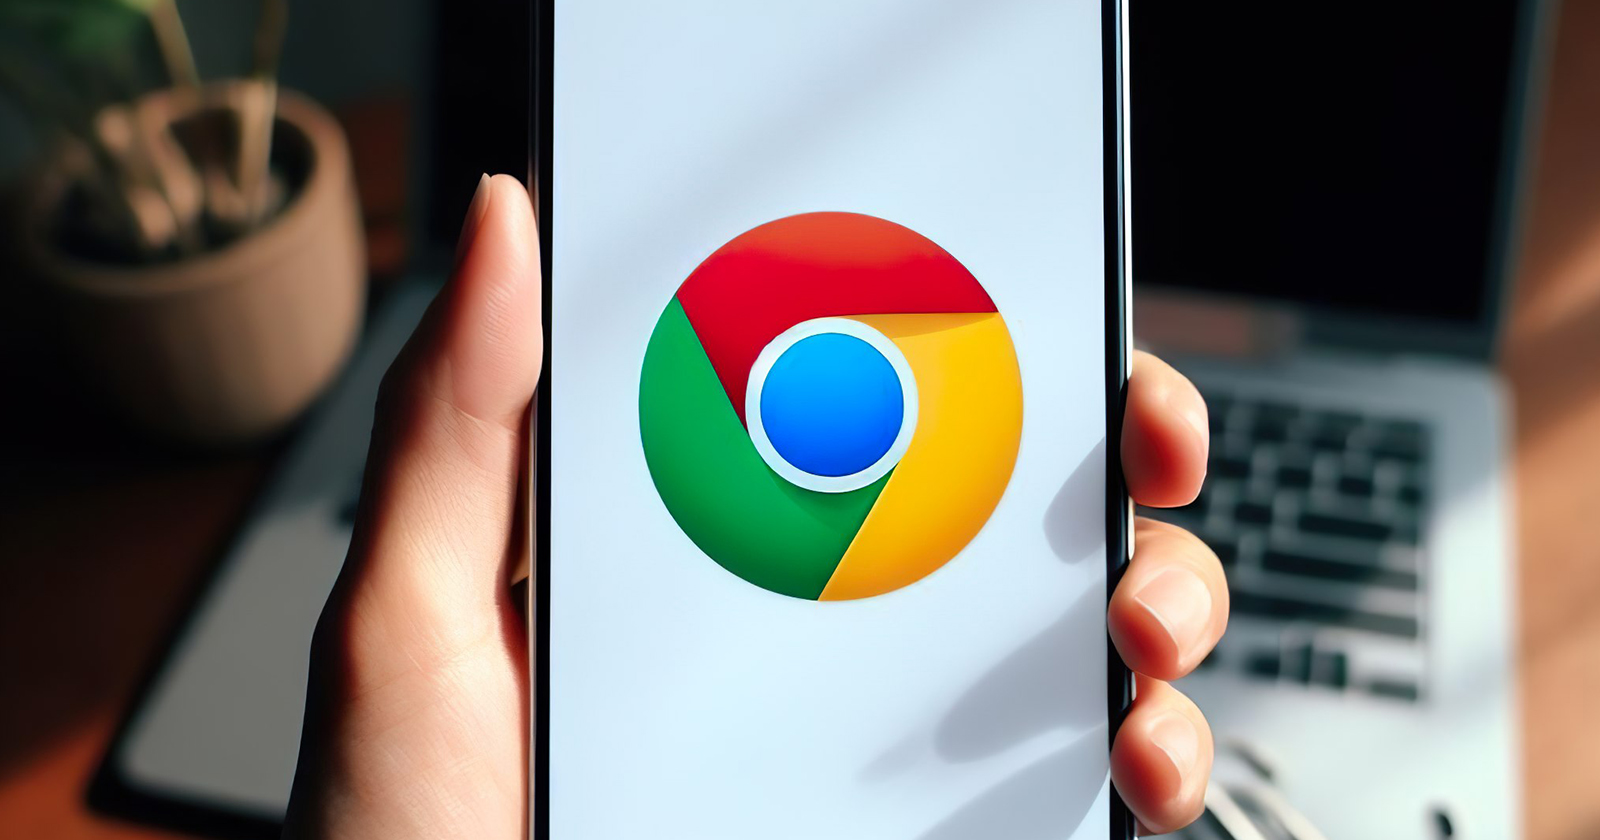 Google Chrome performance will skyrocket! Here’s why